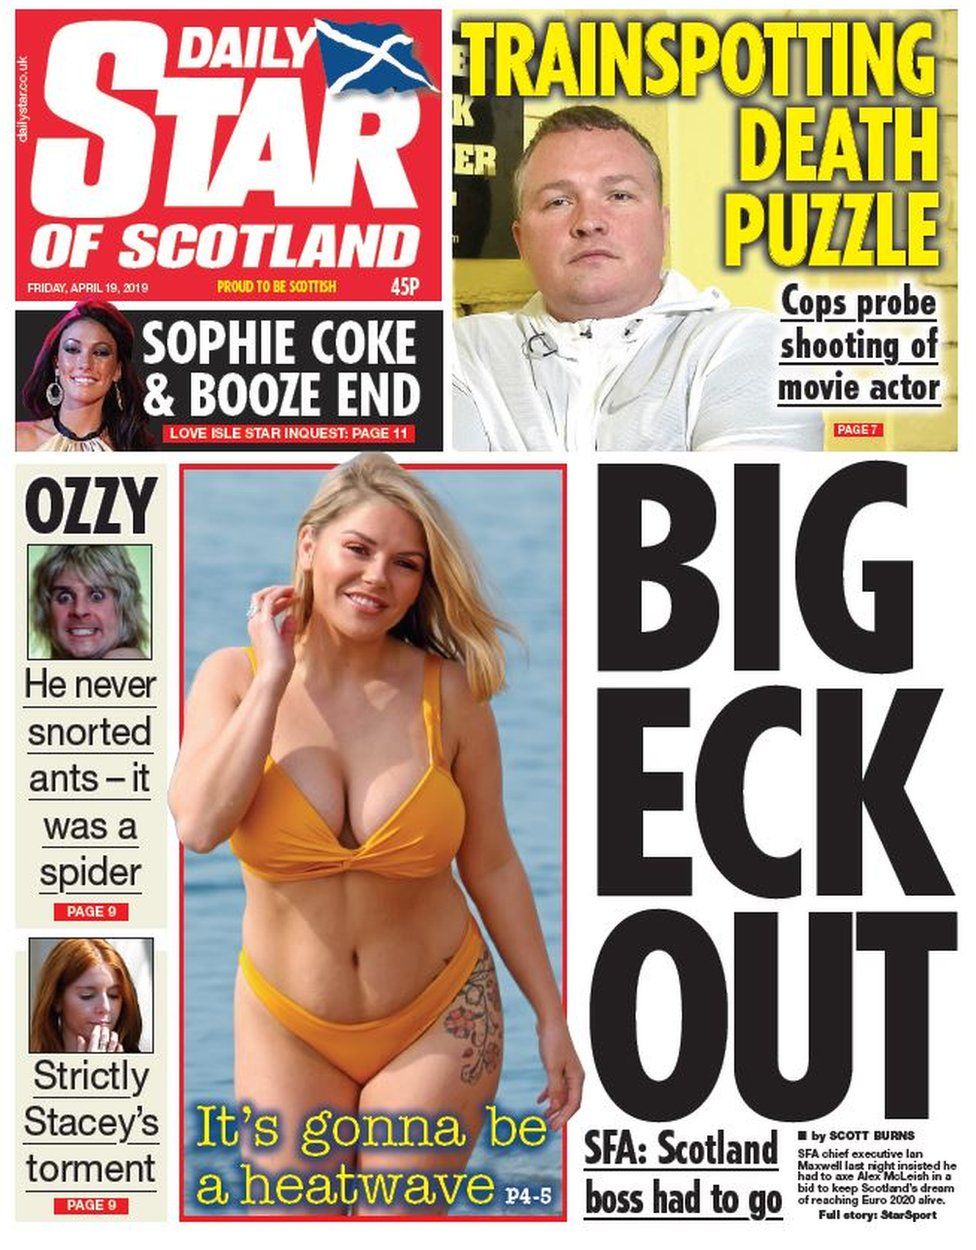 Daily Star of Scotland